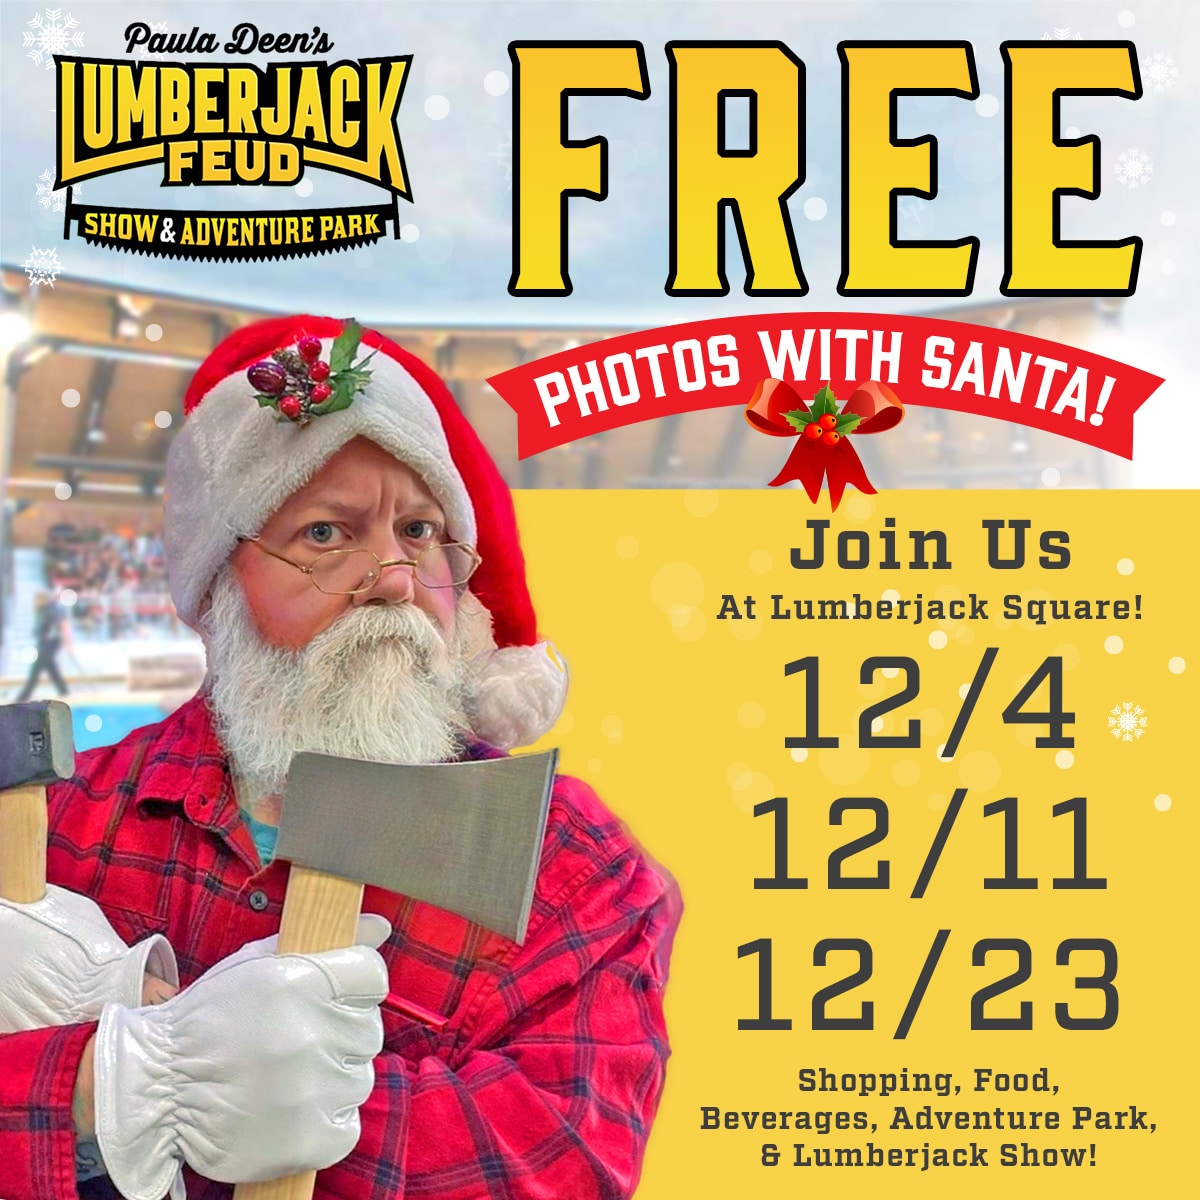 Free photos with Santa at Lumberjack Feud